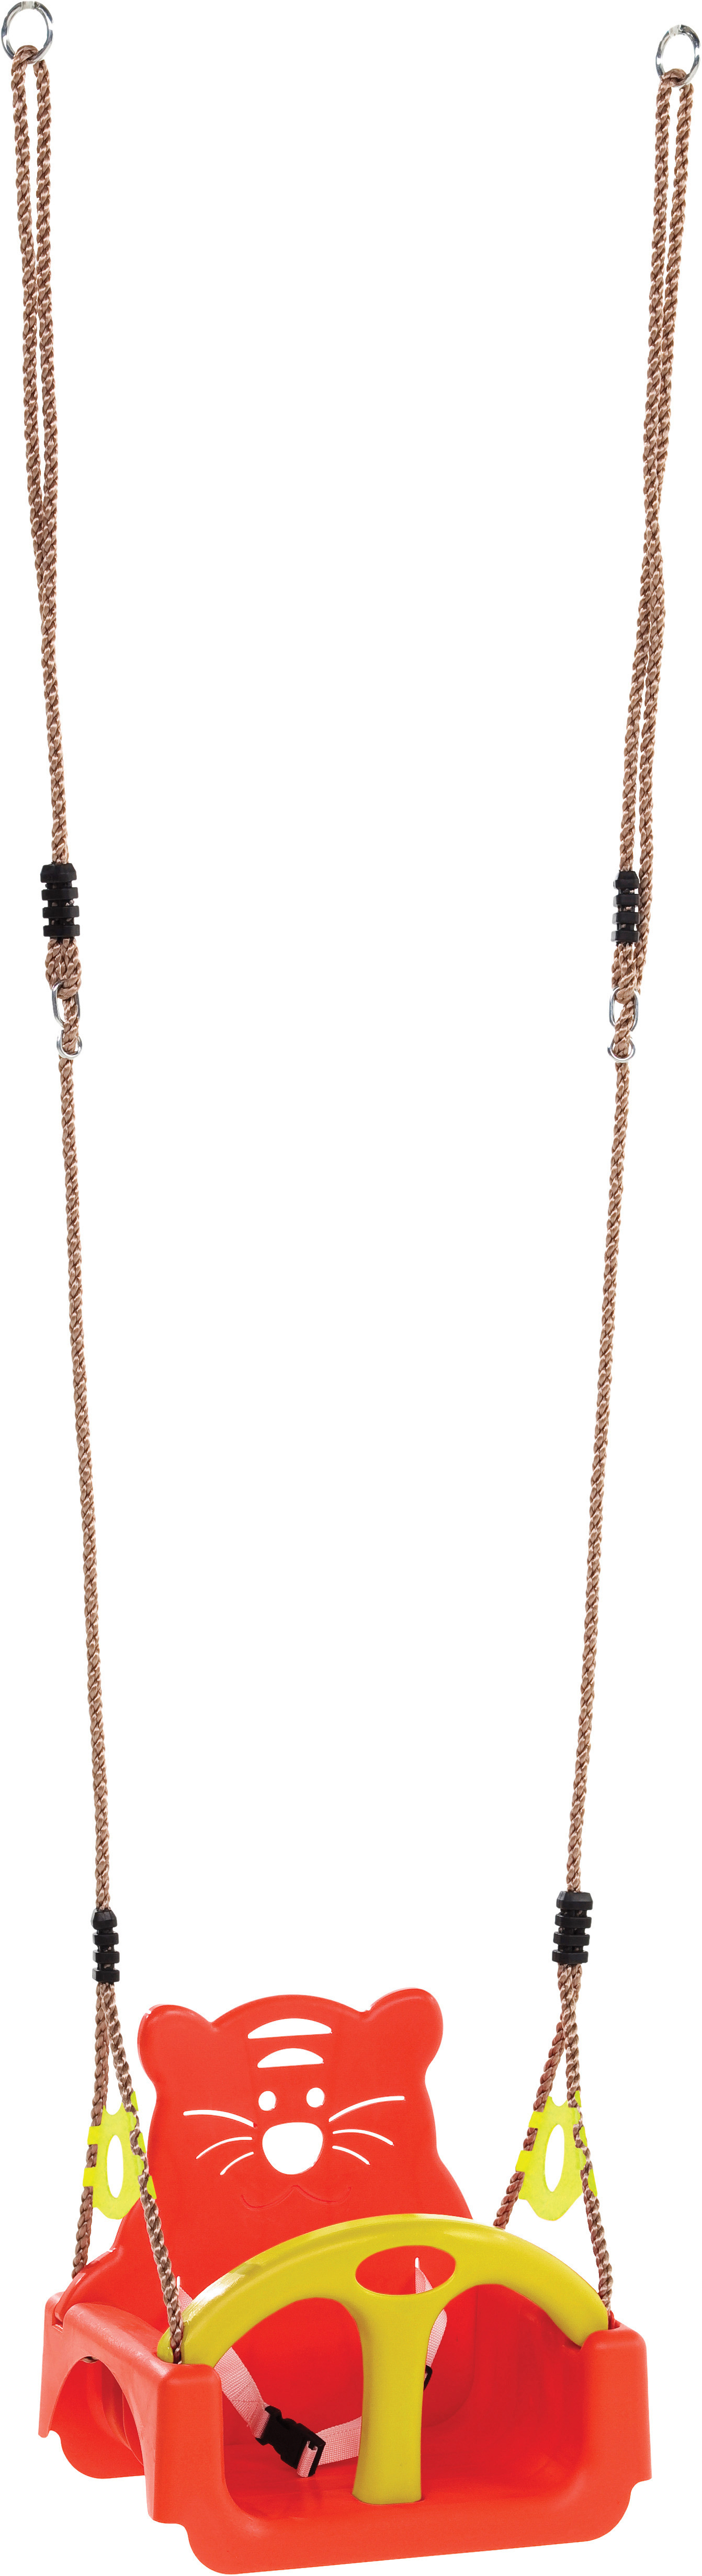 Crochet de balançoire avec manille Swing King M12 x 13,5cm